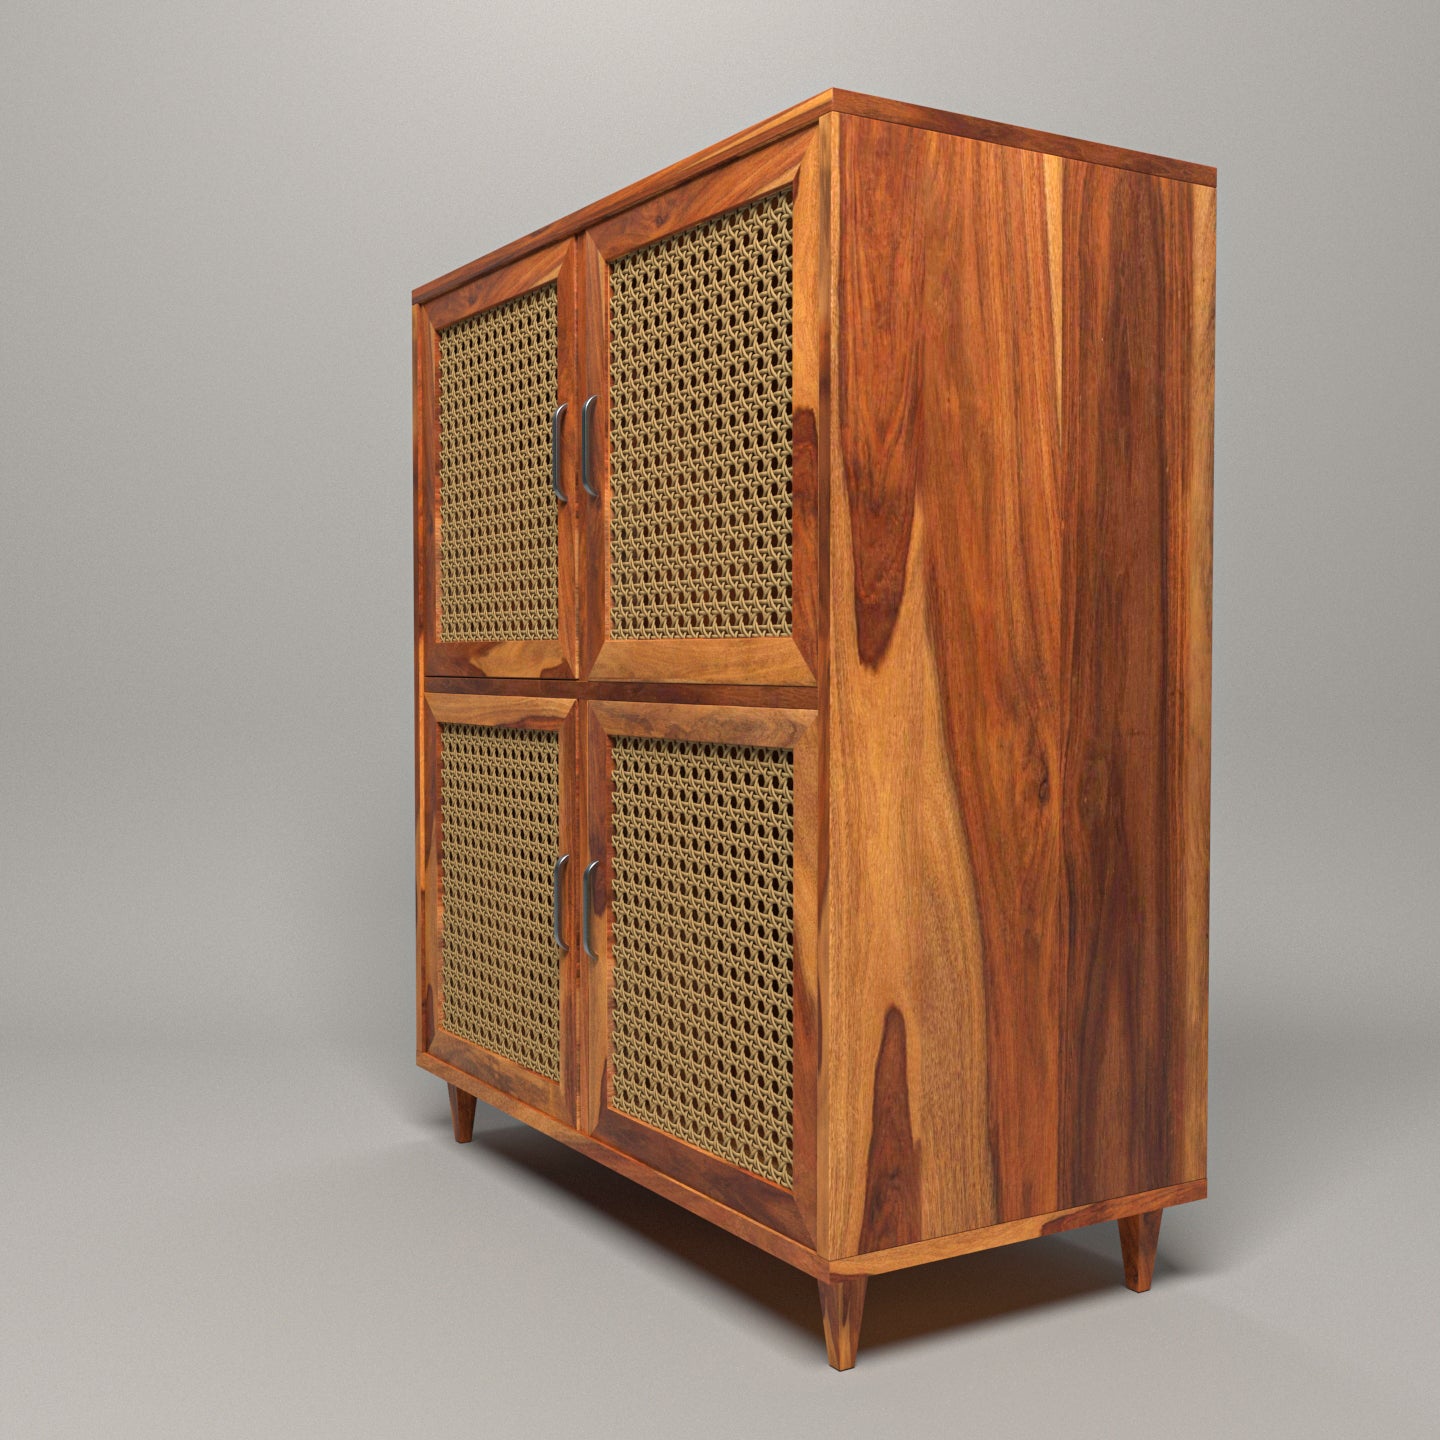 Vintage Style Handmade Wooden Storage Cabinet with Cane (inside single shelf) Cupboard